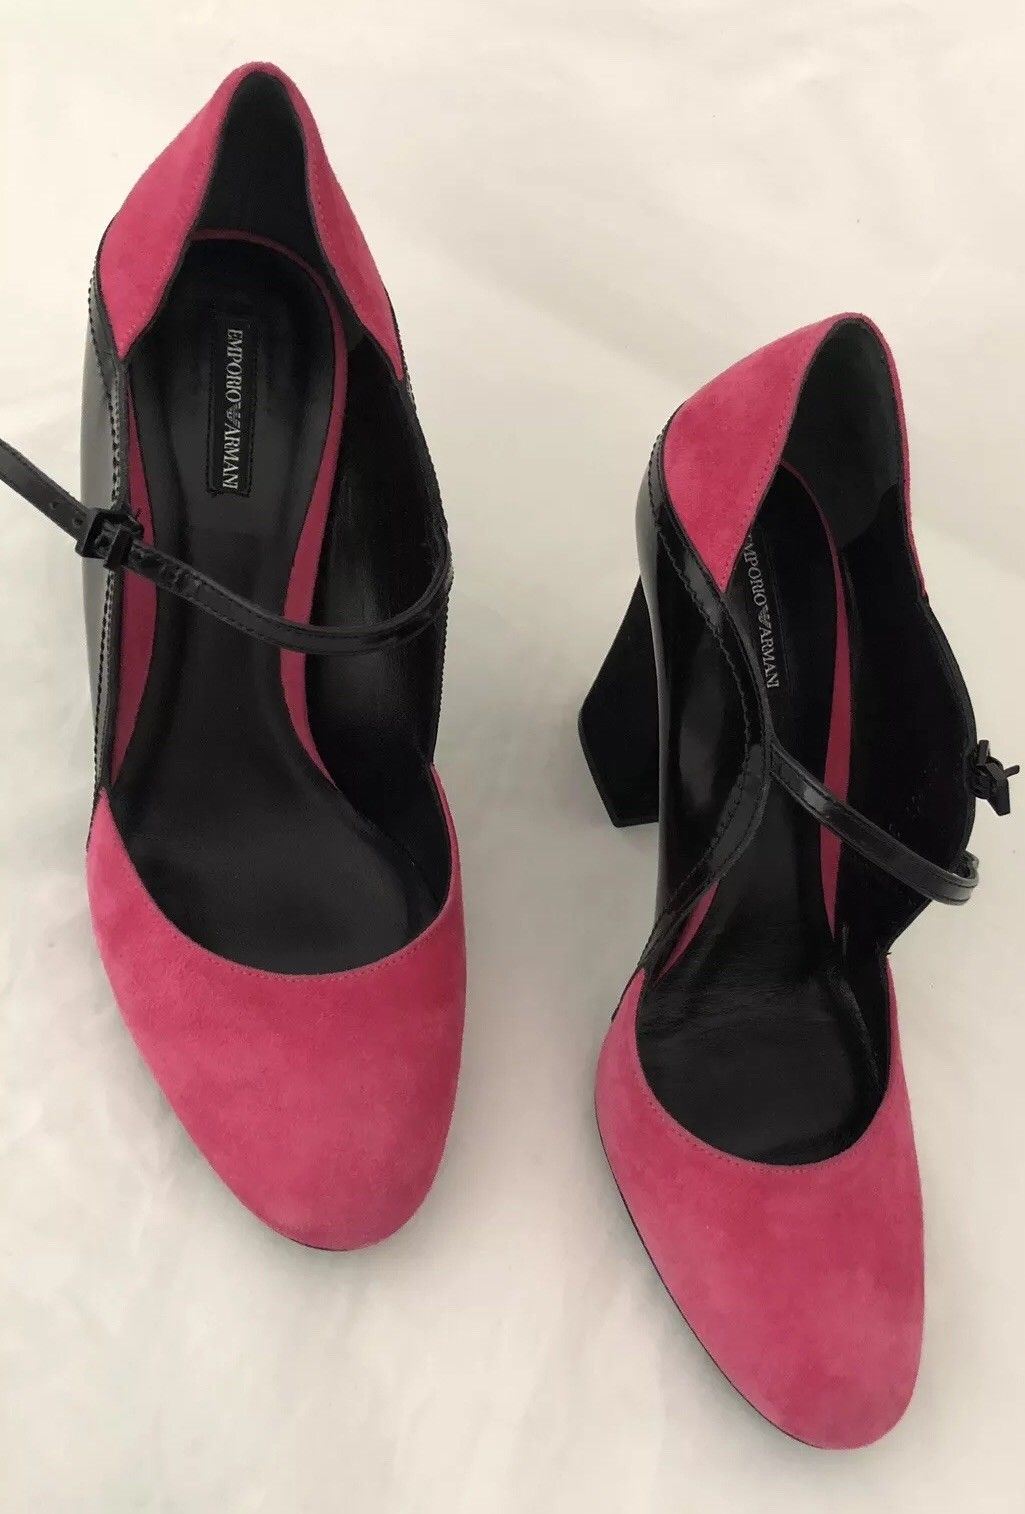 NIB $595 Emporio Armani Women's High Heel Suede Pink Dress Shoes 8 US X3E261 IT